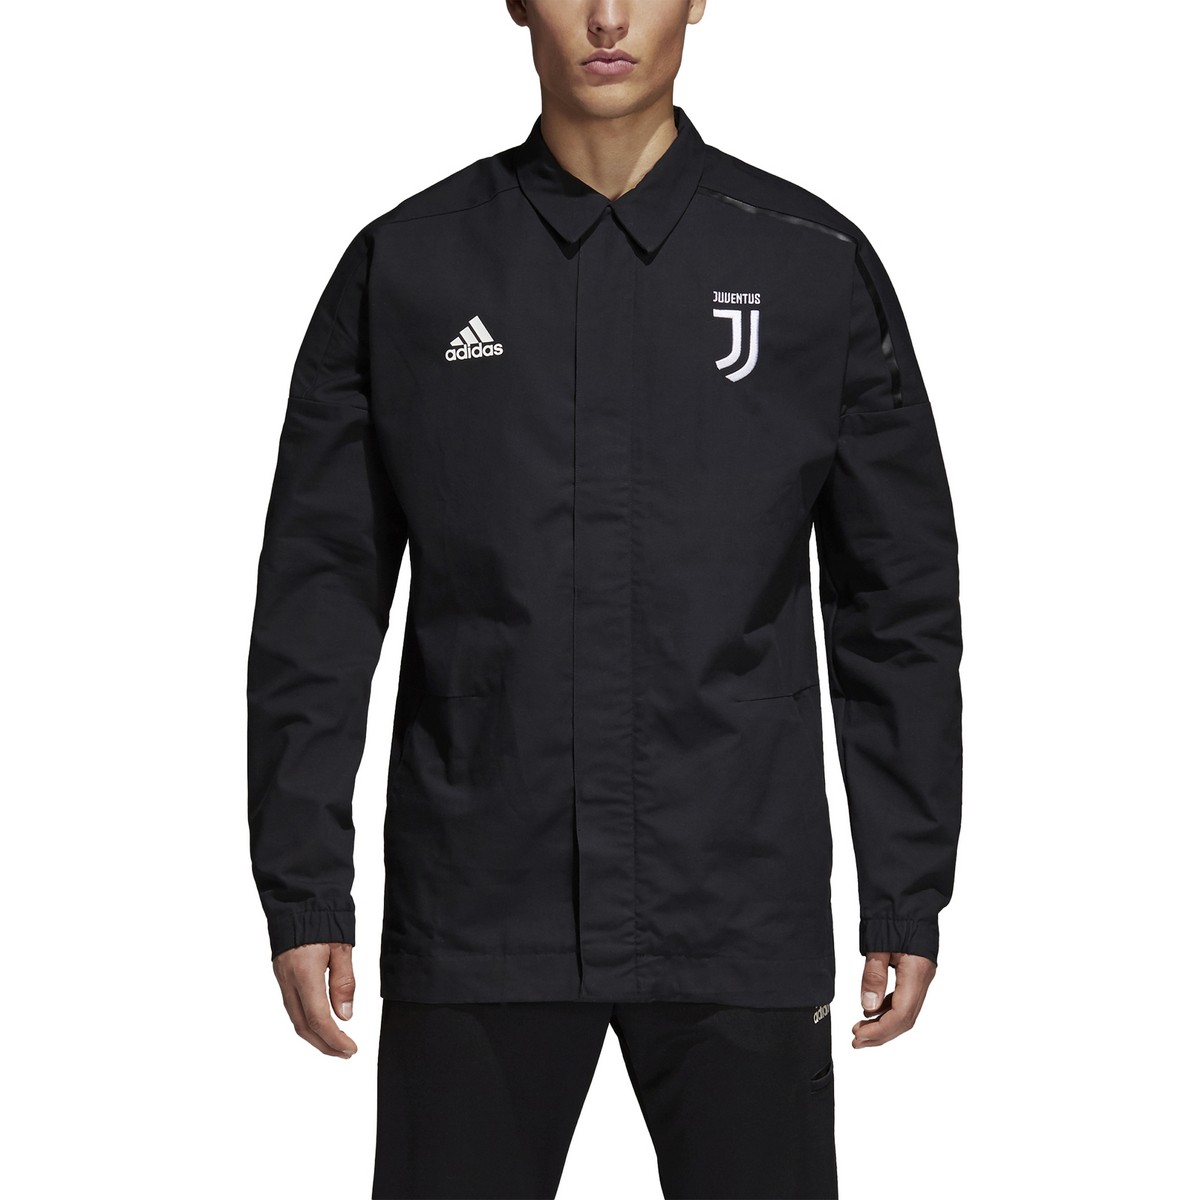 Juventus giacca track top Z.N.E. nera 2017/18 Adidas